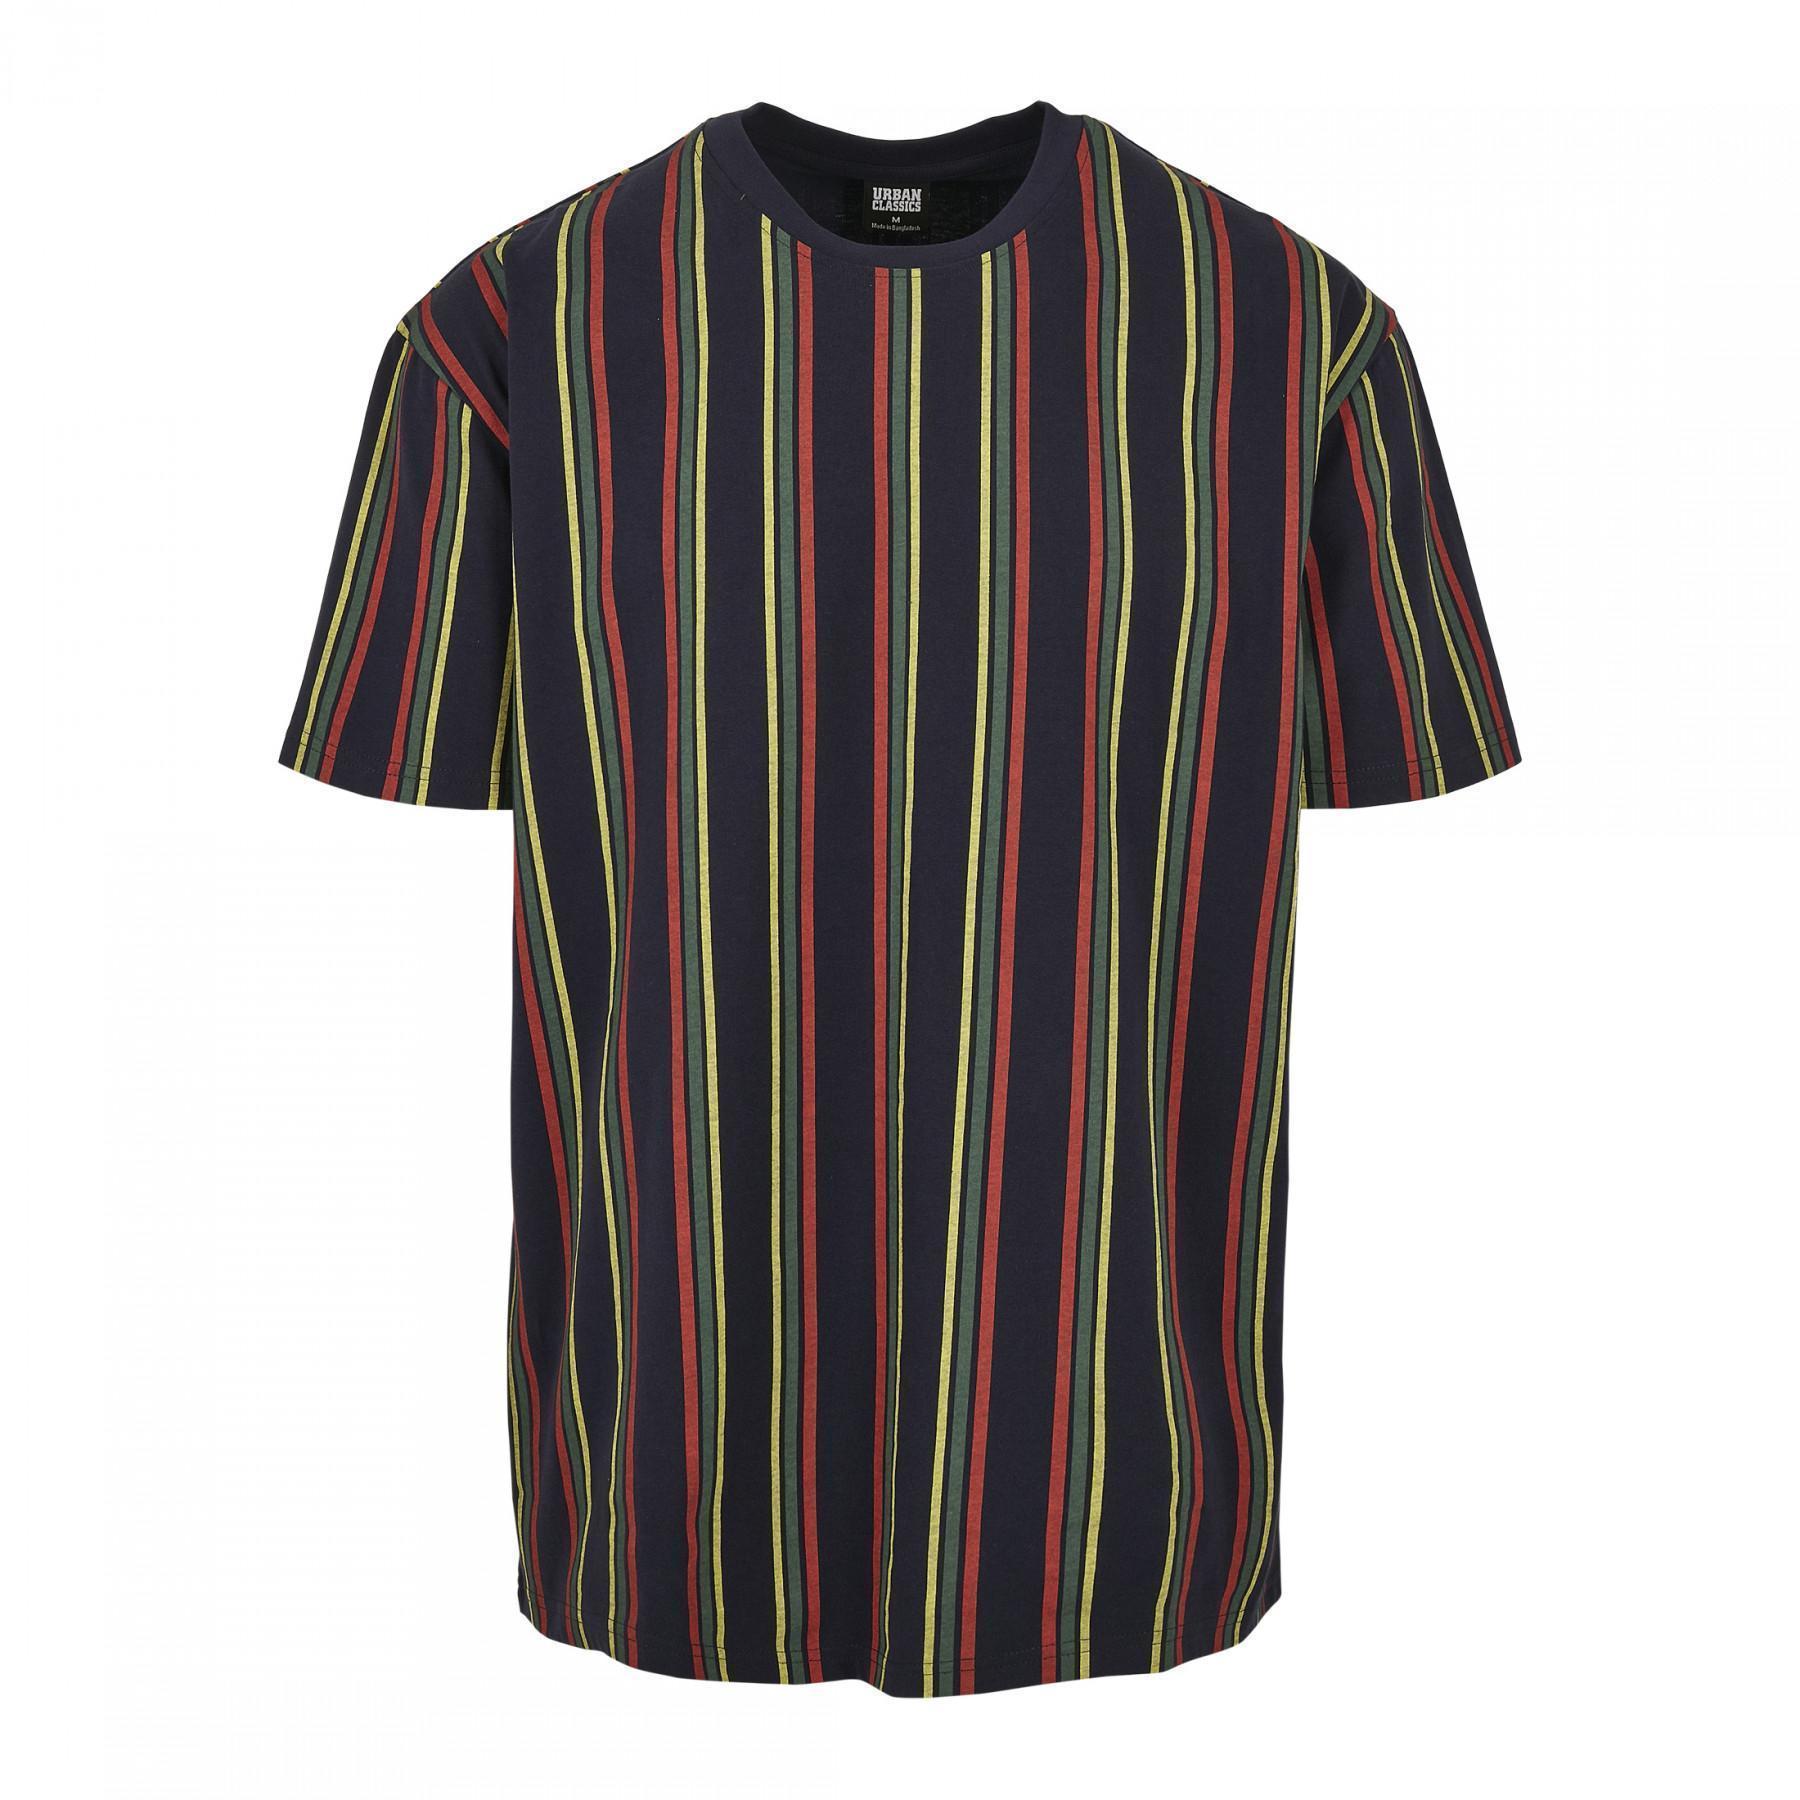 T-shirt Urban Classics printed oversized retro stripe